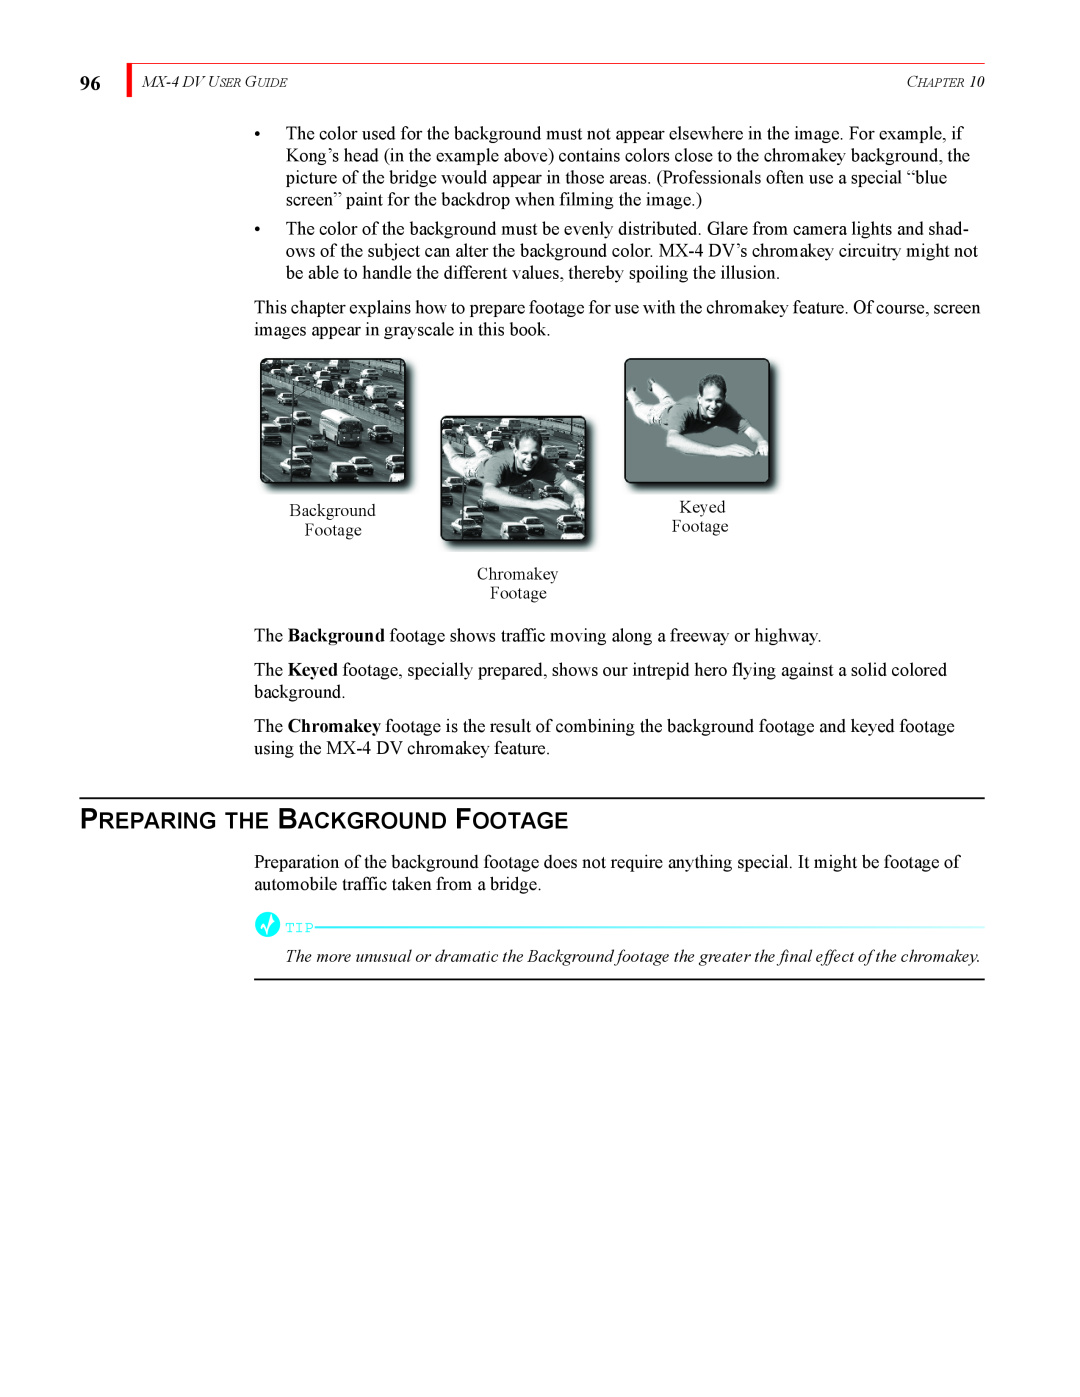 FOCUS Enhancements MX-4DV manual Preparing The Background Footage, Keyed, Chromakey 